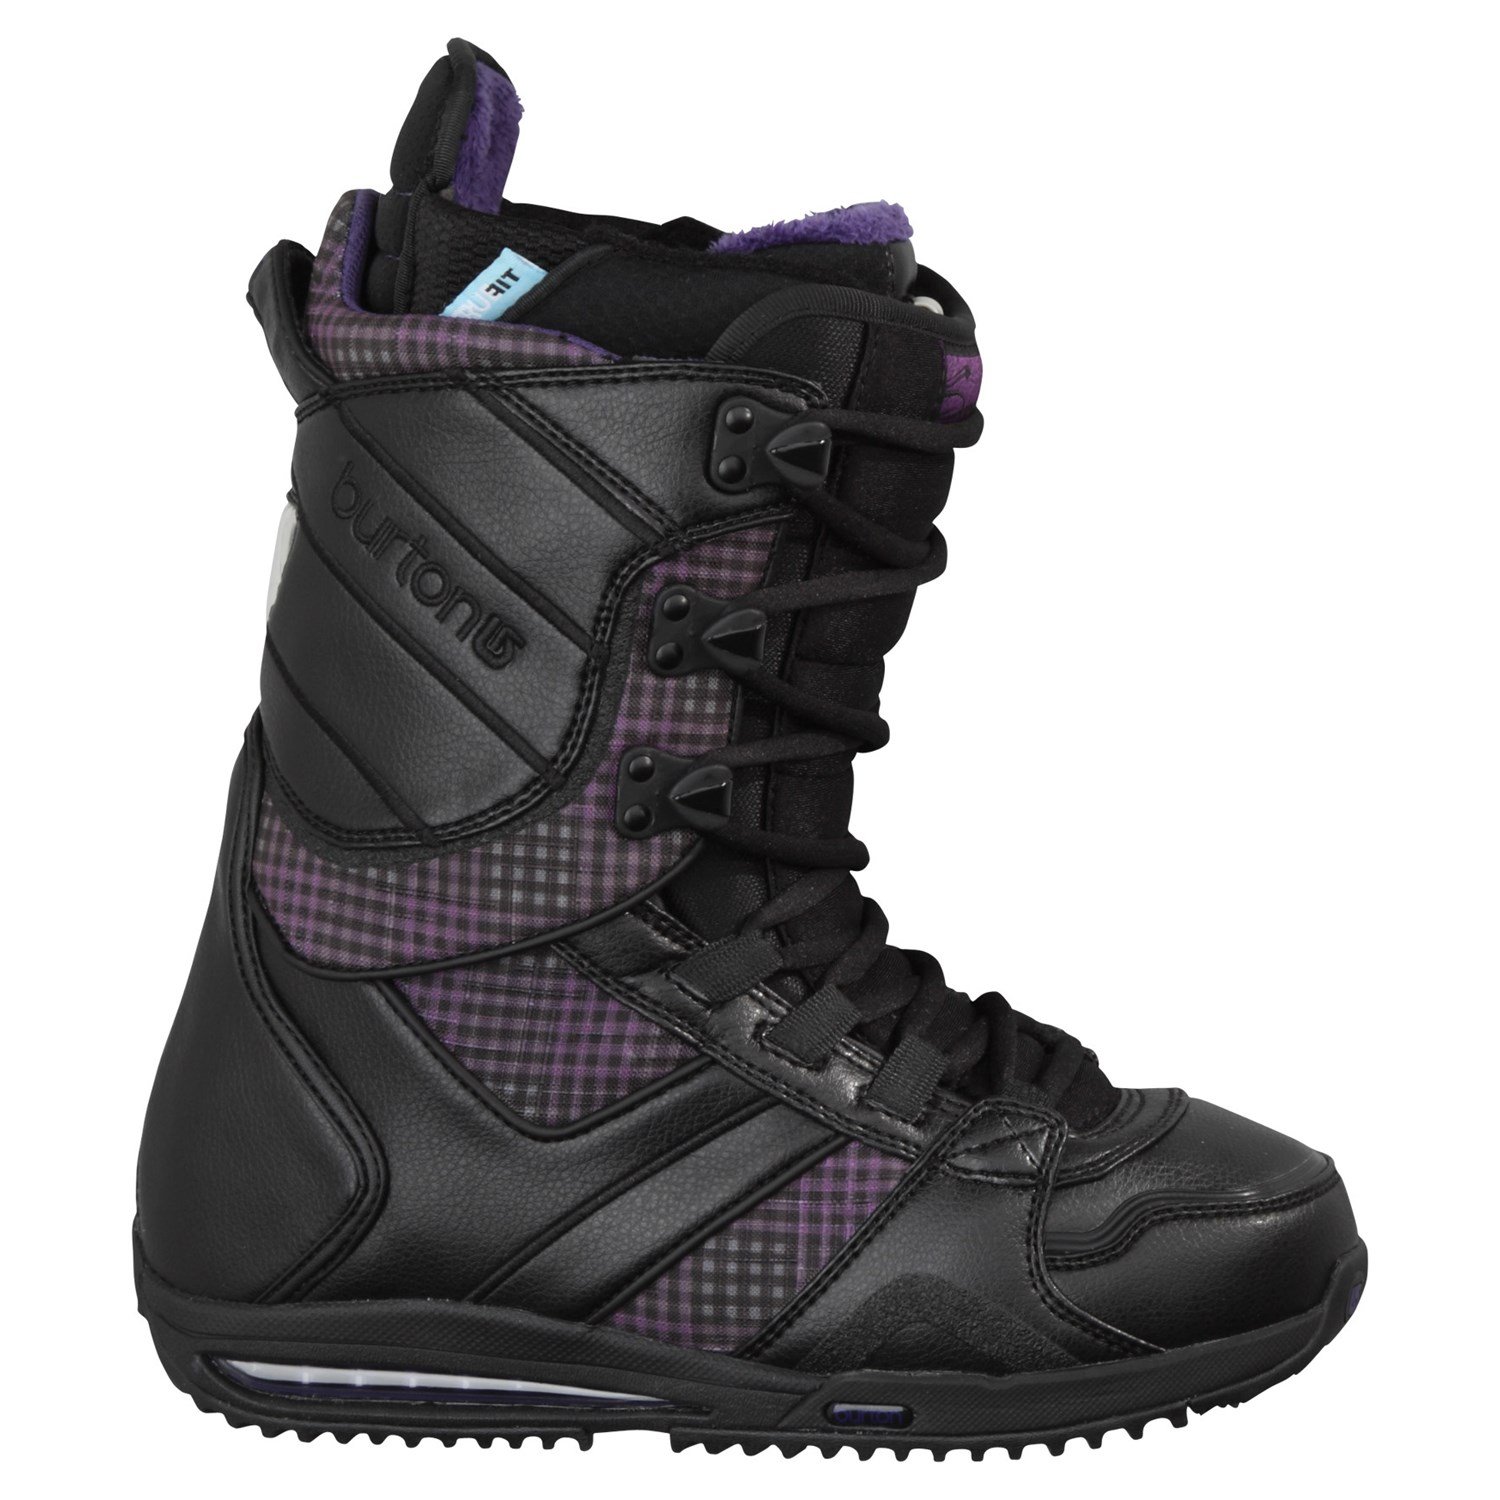 Republikeinse partij vervormen overdrijven Burton Sapphire Snowboard Boots - Women's 2011 | evo